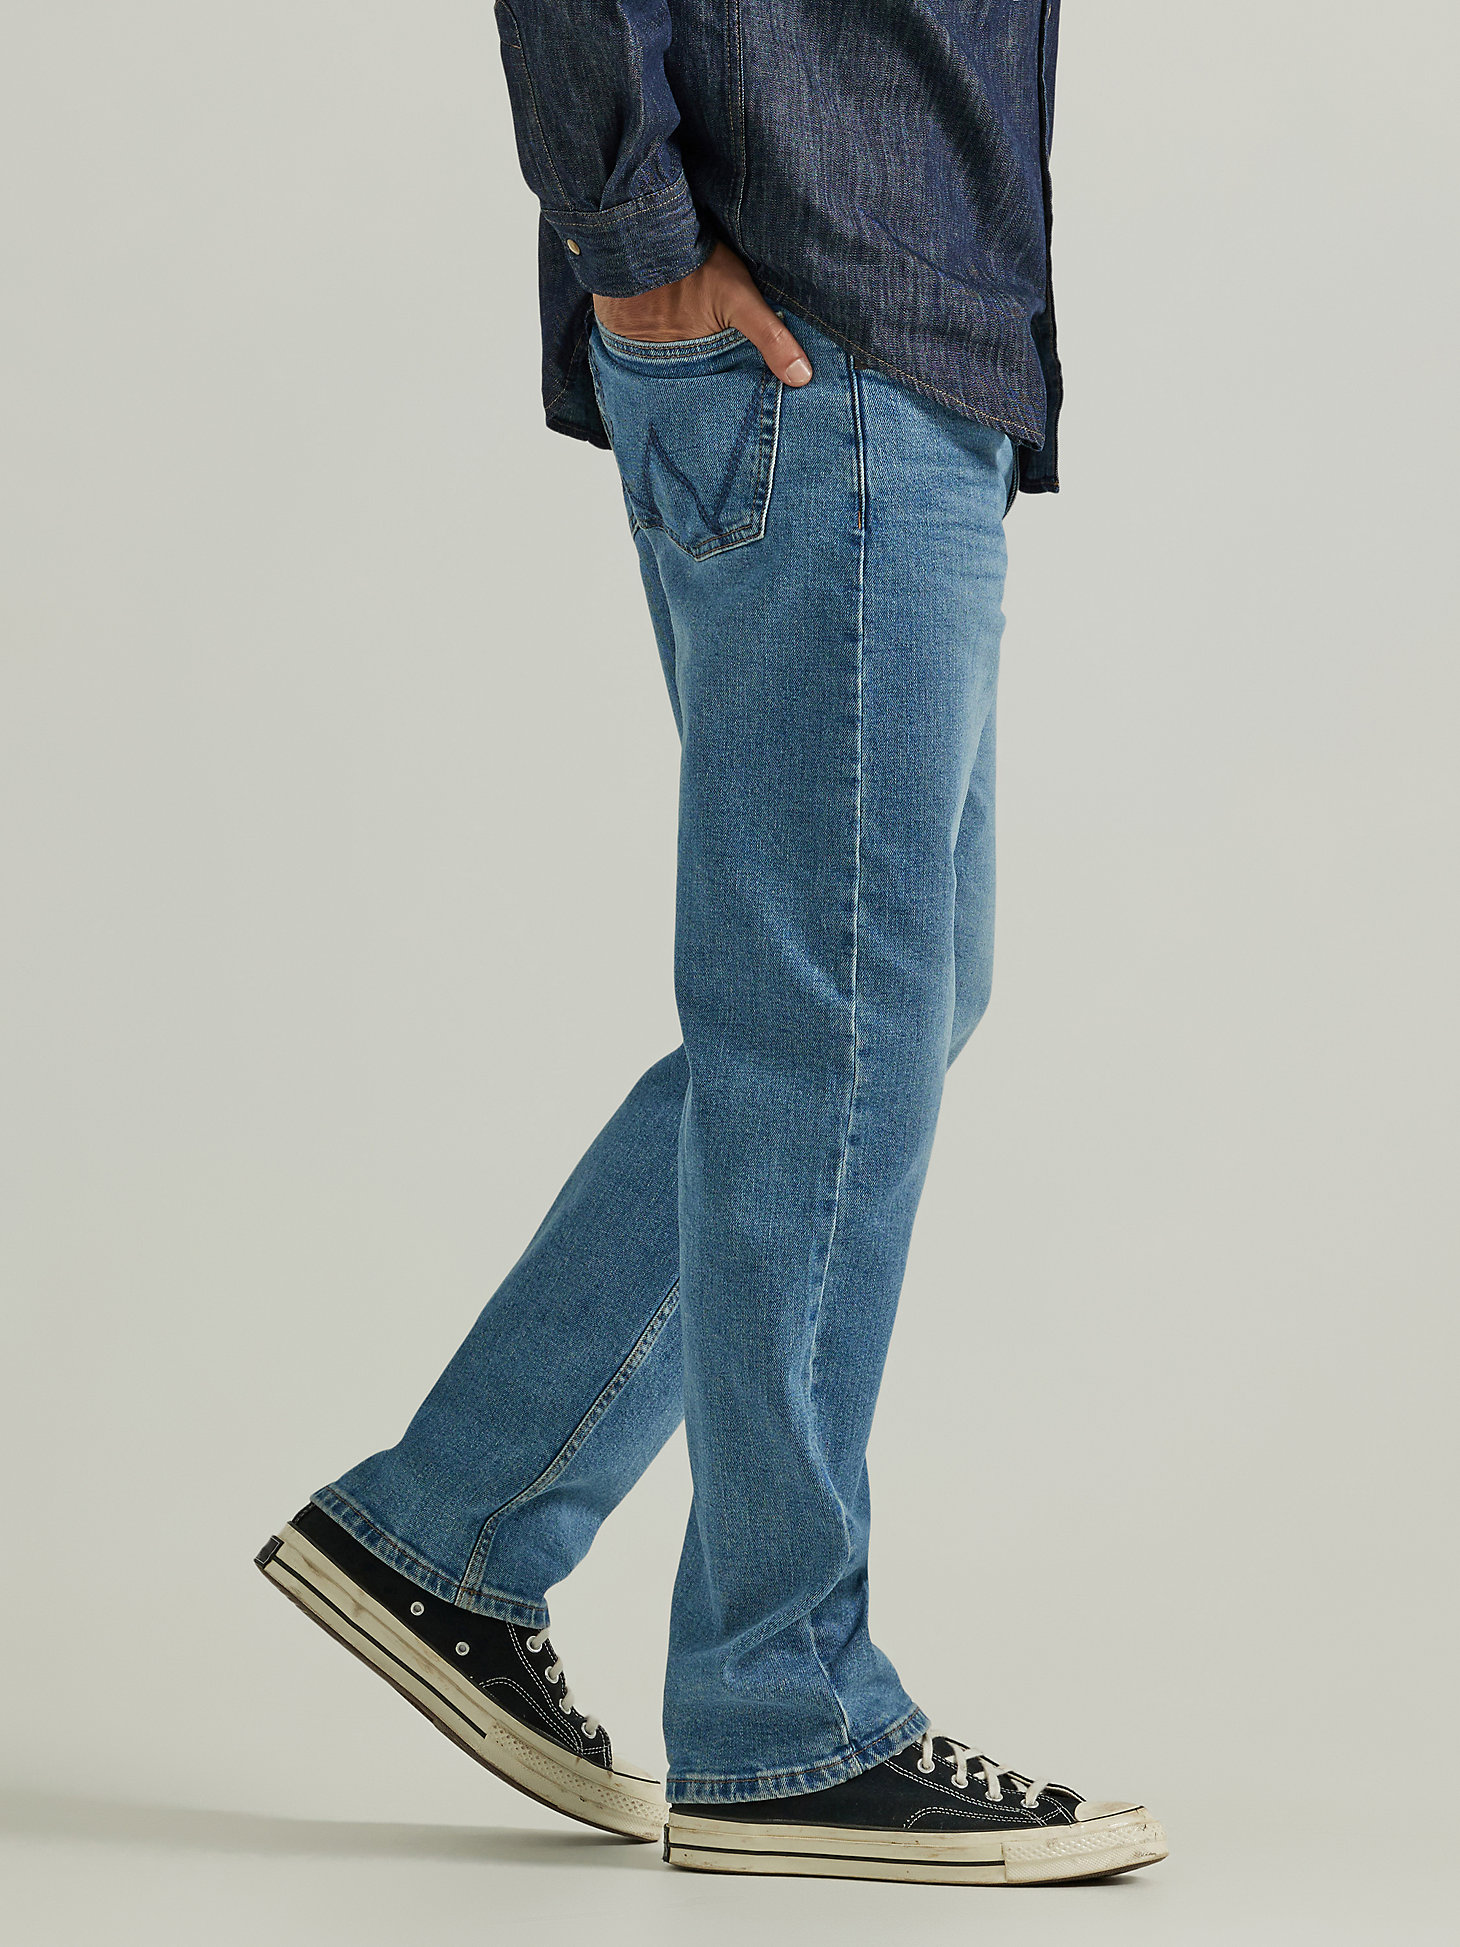 Men's Regular Fit Flex Jean in Light Wash alternative view 2